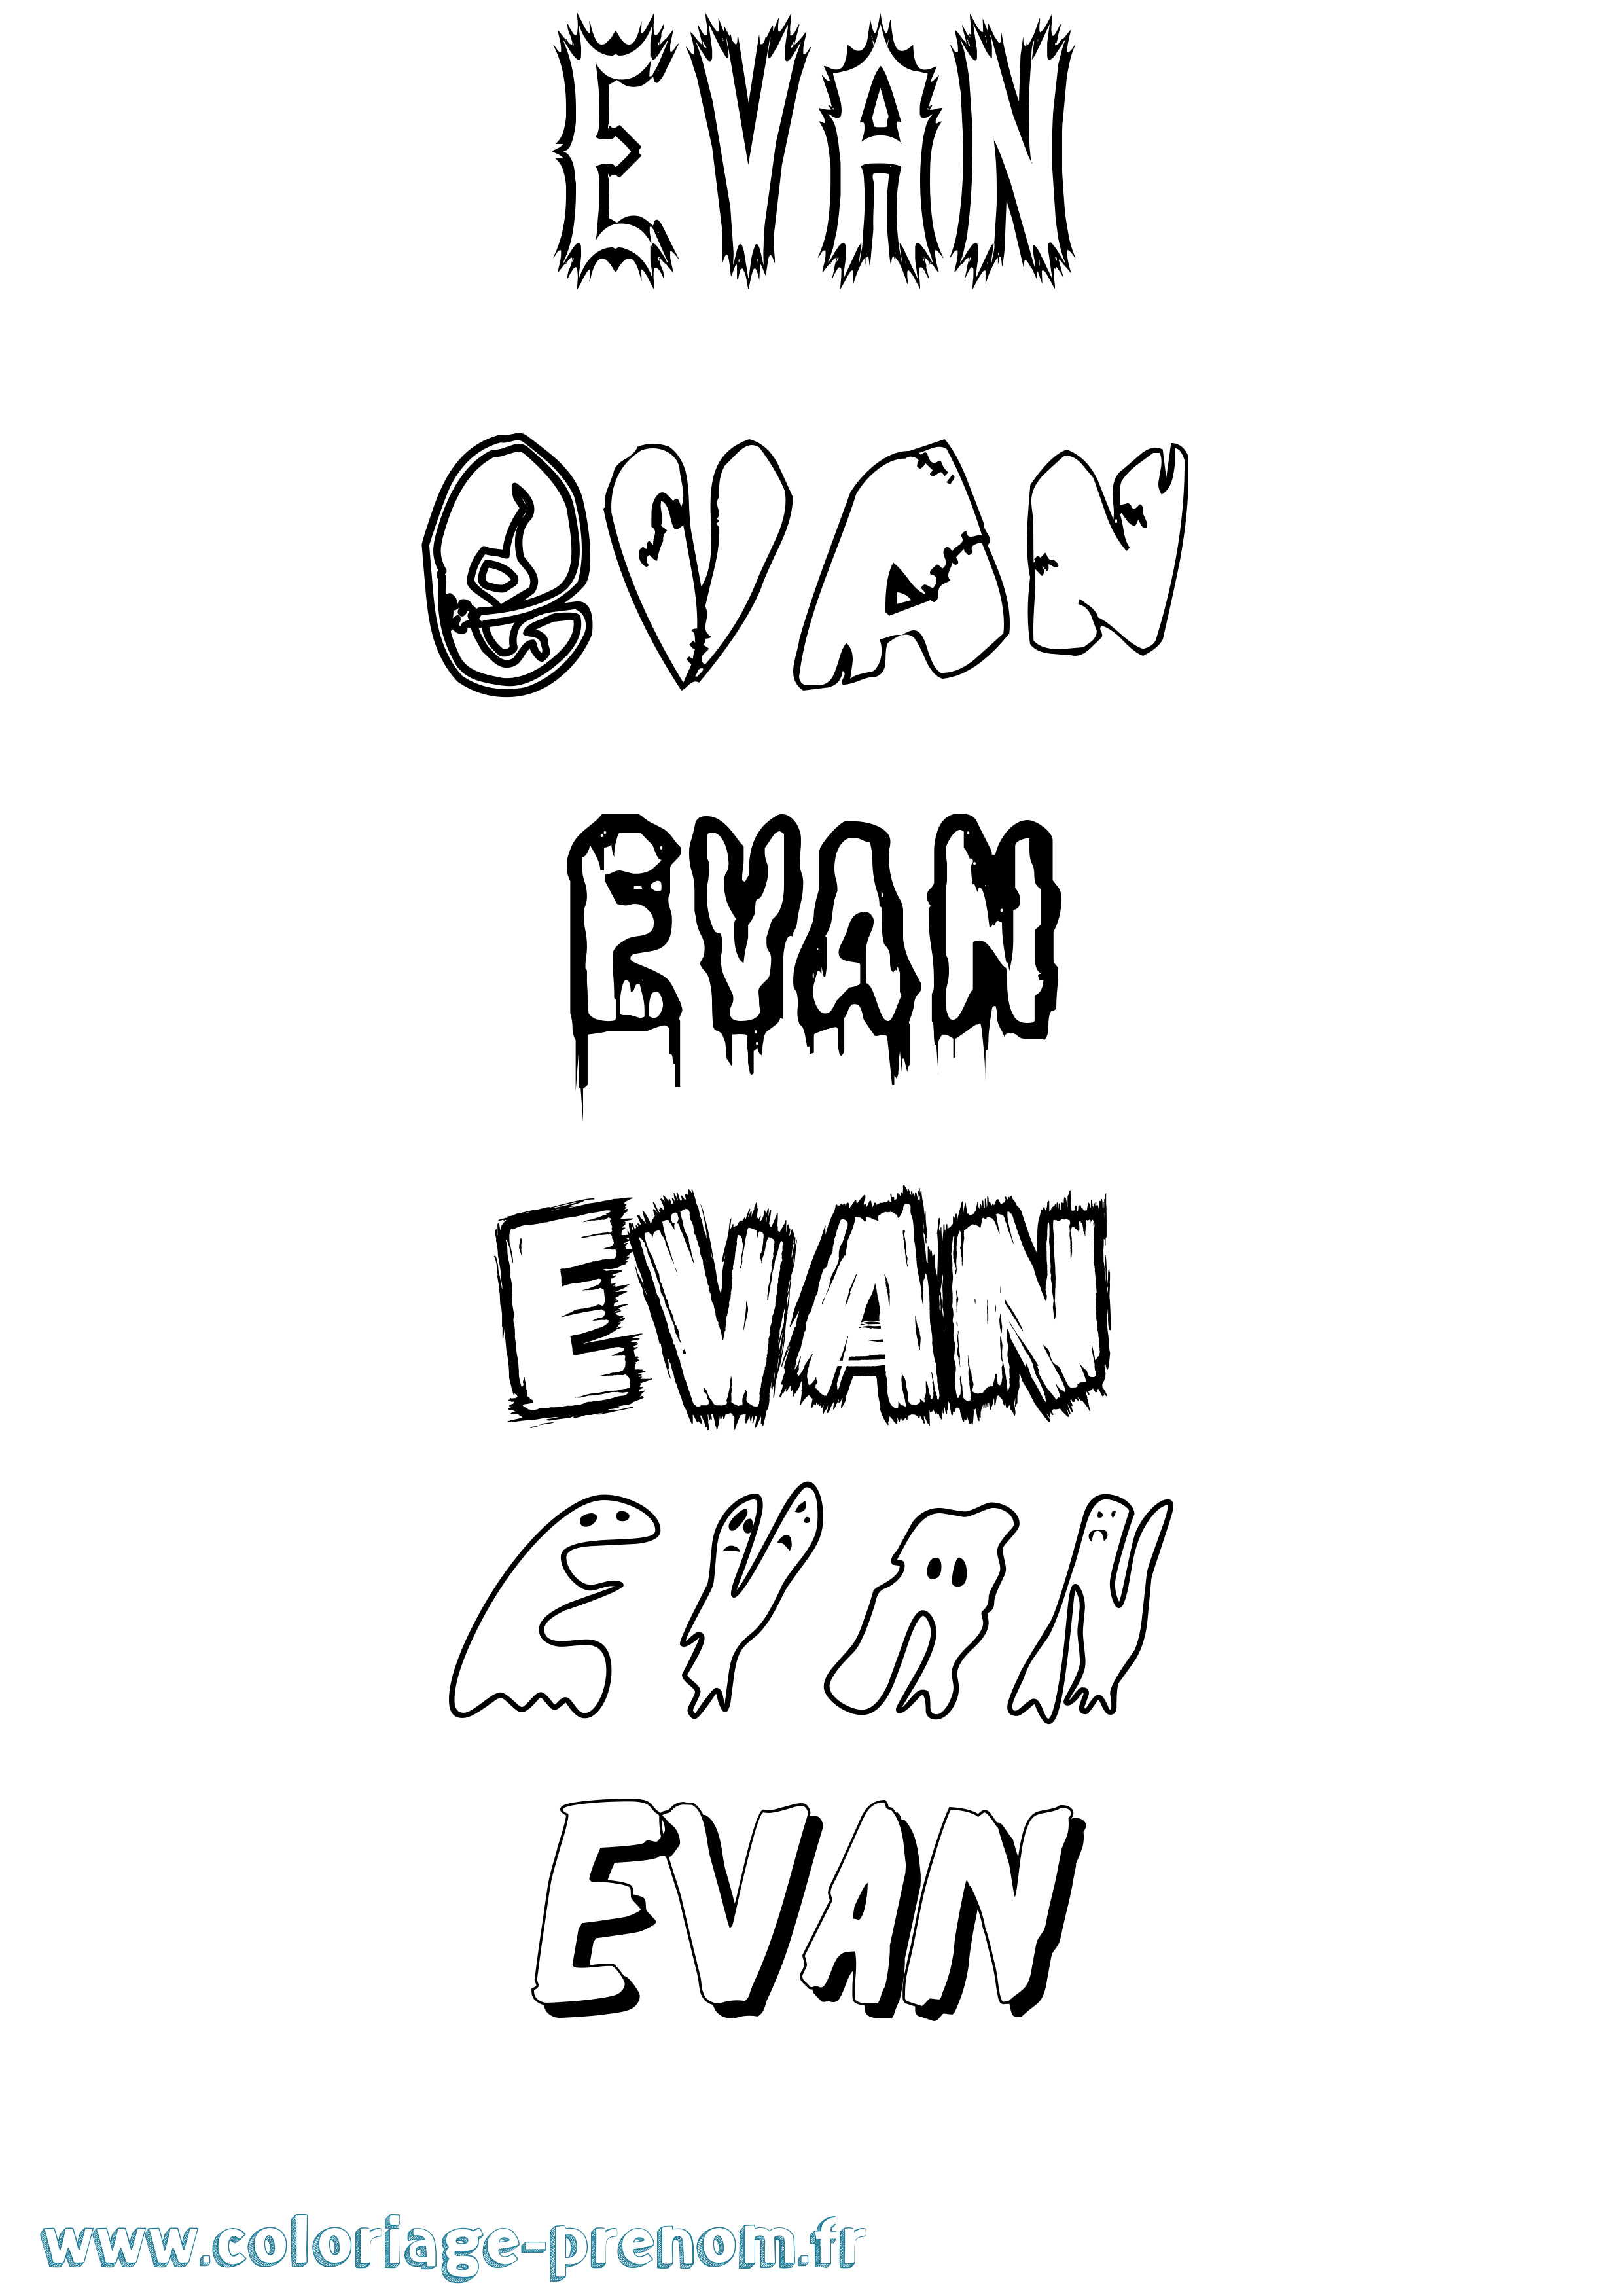 Coloriage prénom Evan Frisson